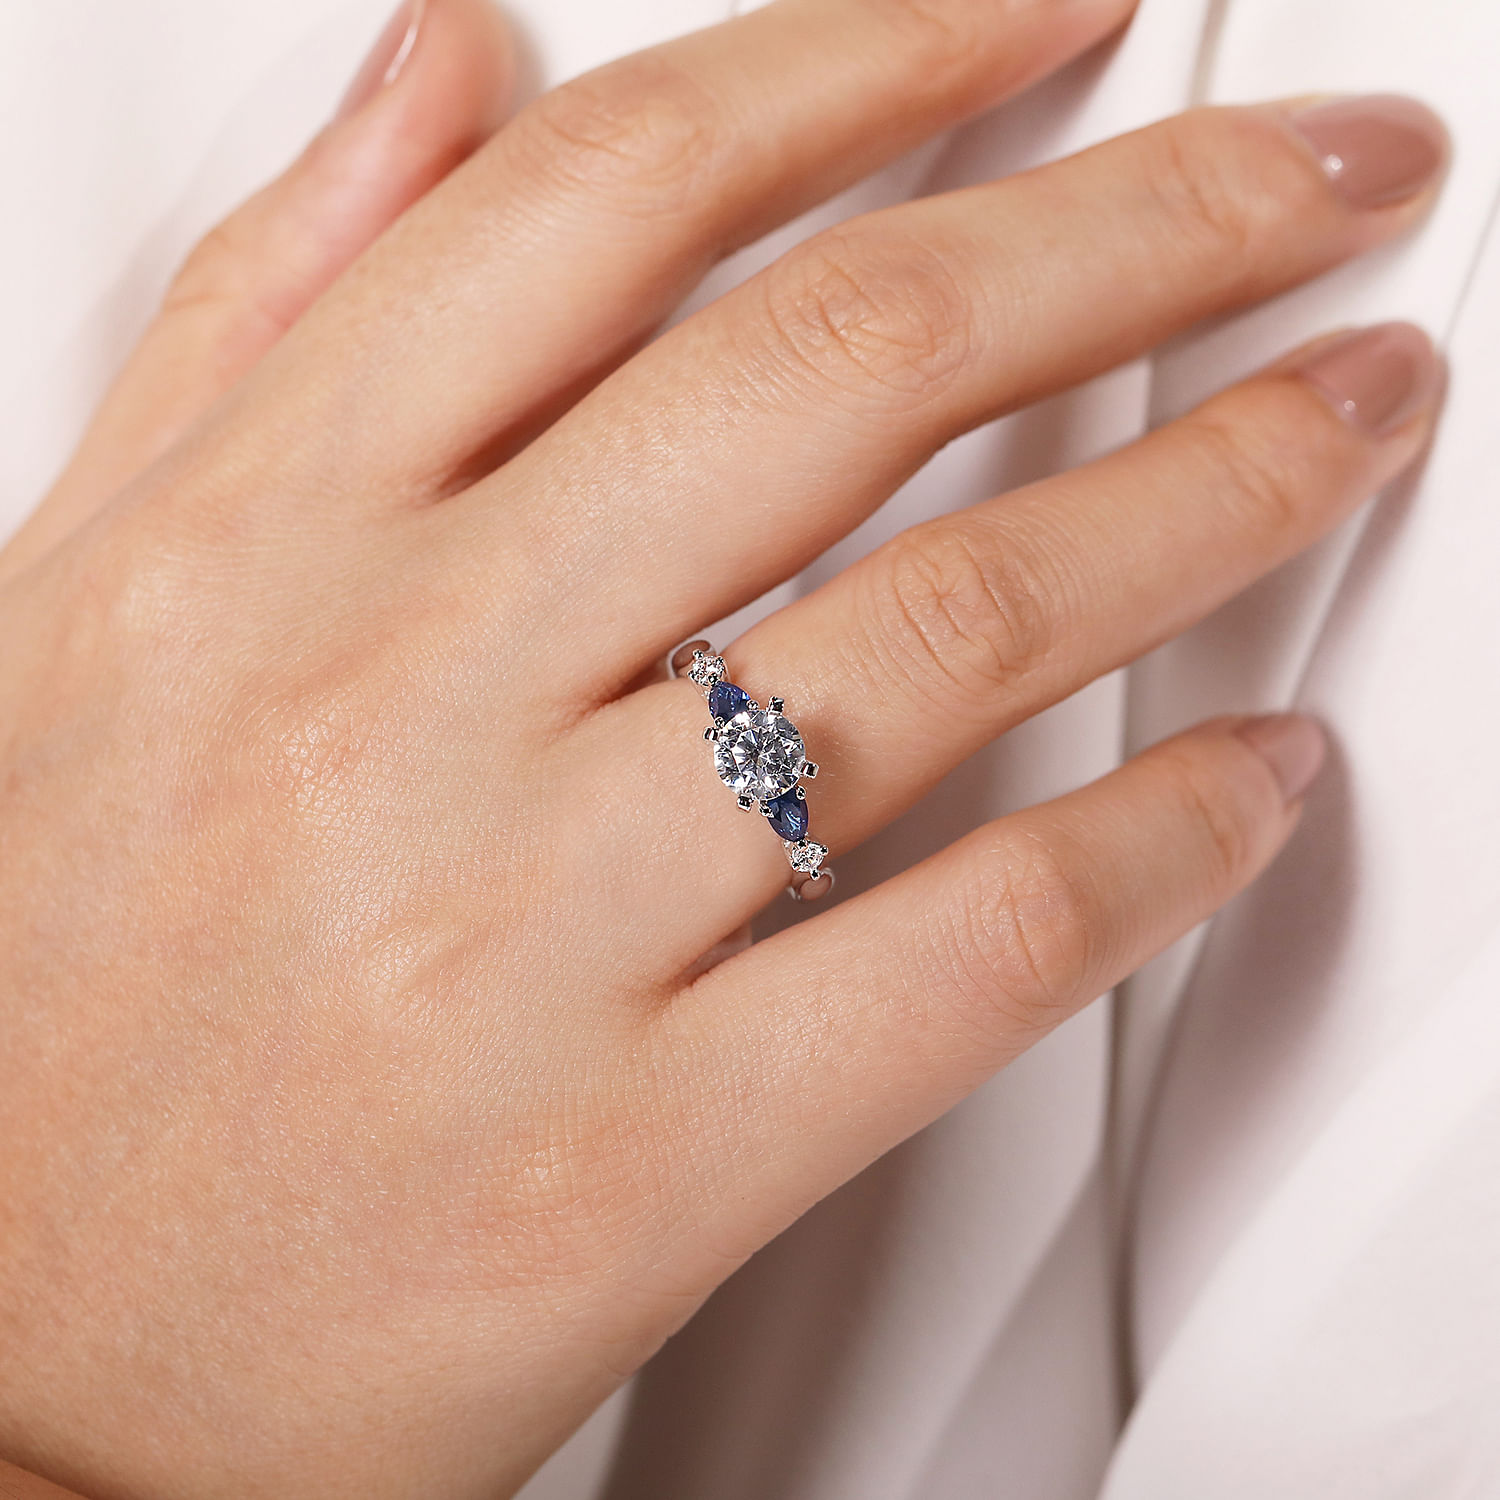 Platinum Round Five Stone Sapphire and Diamond Engagement Ring